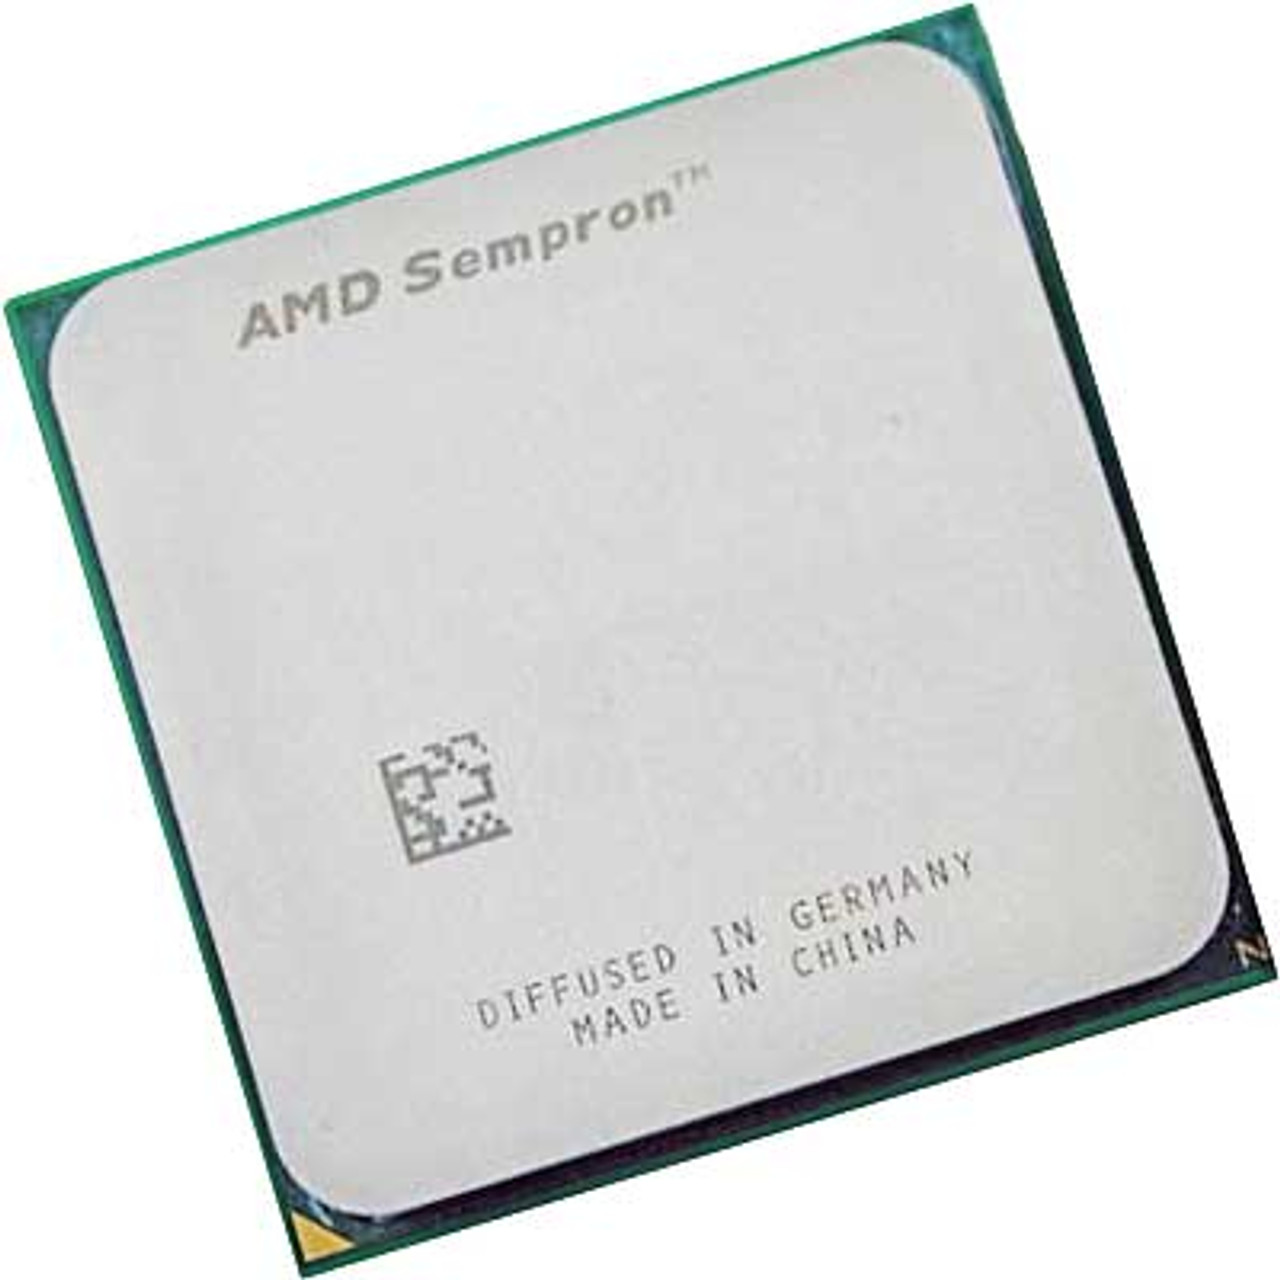 AMD SDX180HDK22GM - 2.4 GHz 2x 512 KB AM3 Sempron 180 CPU Processor